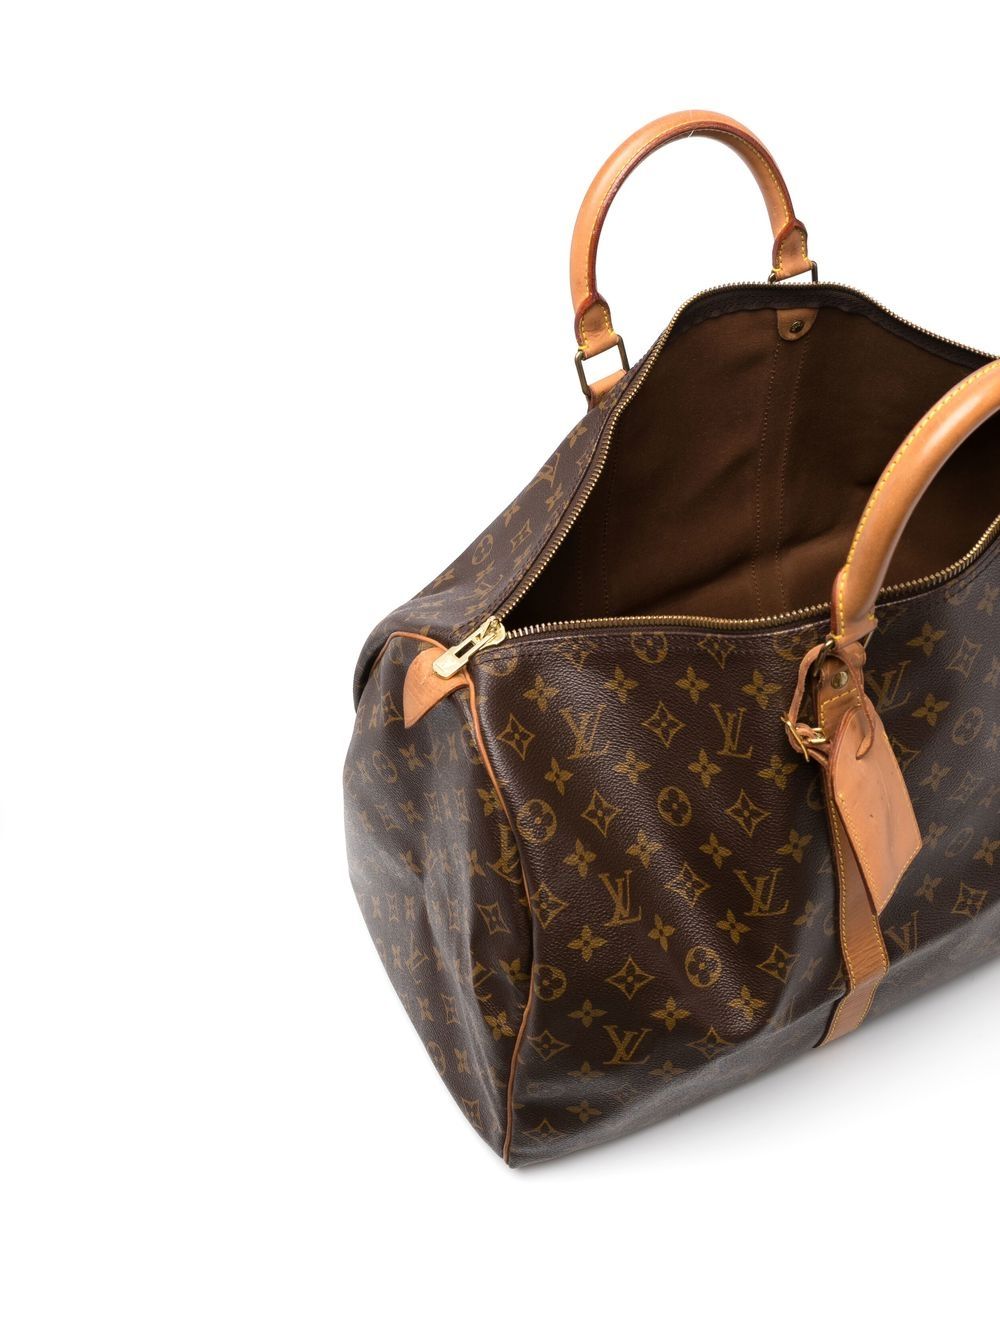 Louis Vuitton 2019 pre-owned Keepall 50 Travel Bag - Farfetch